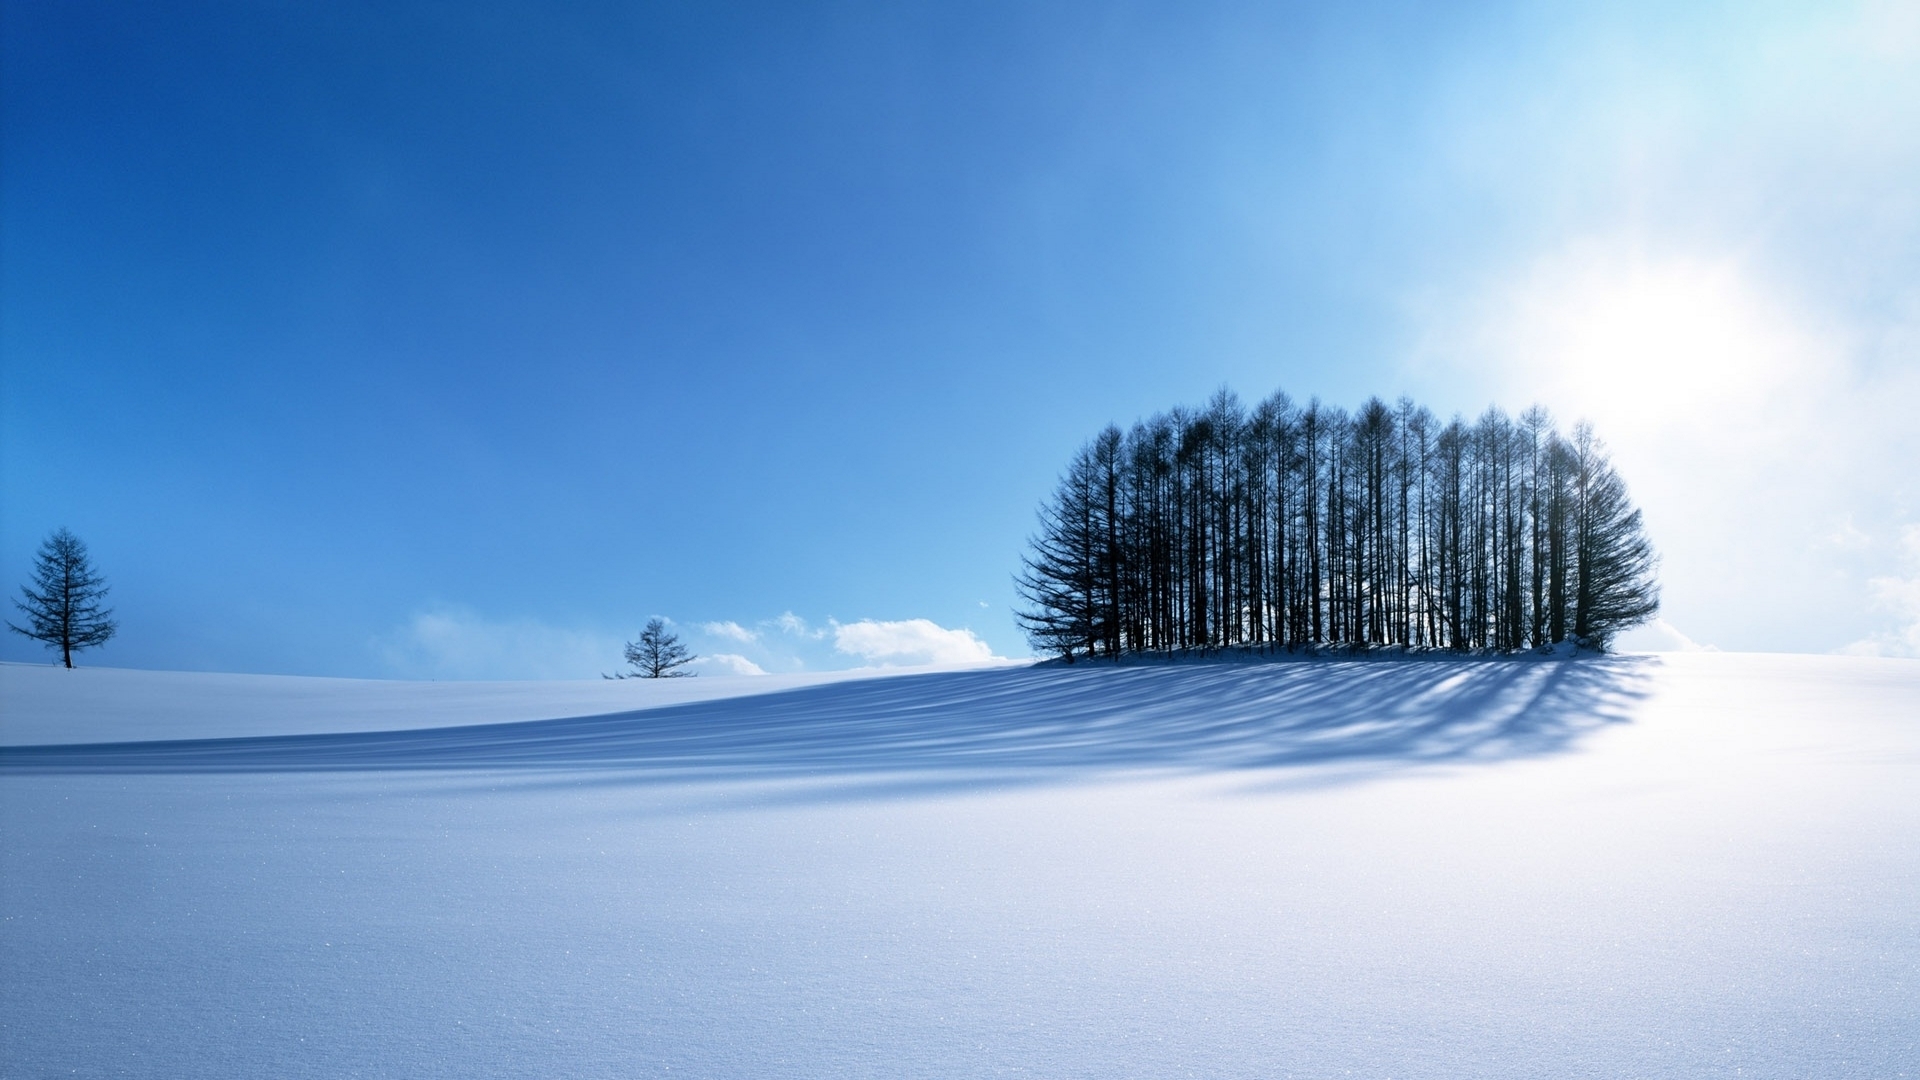 Winter Season - Wallpaper, High Definition, High Quality, Widescreen